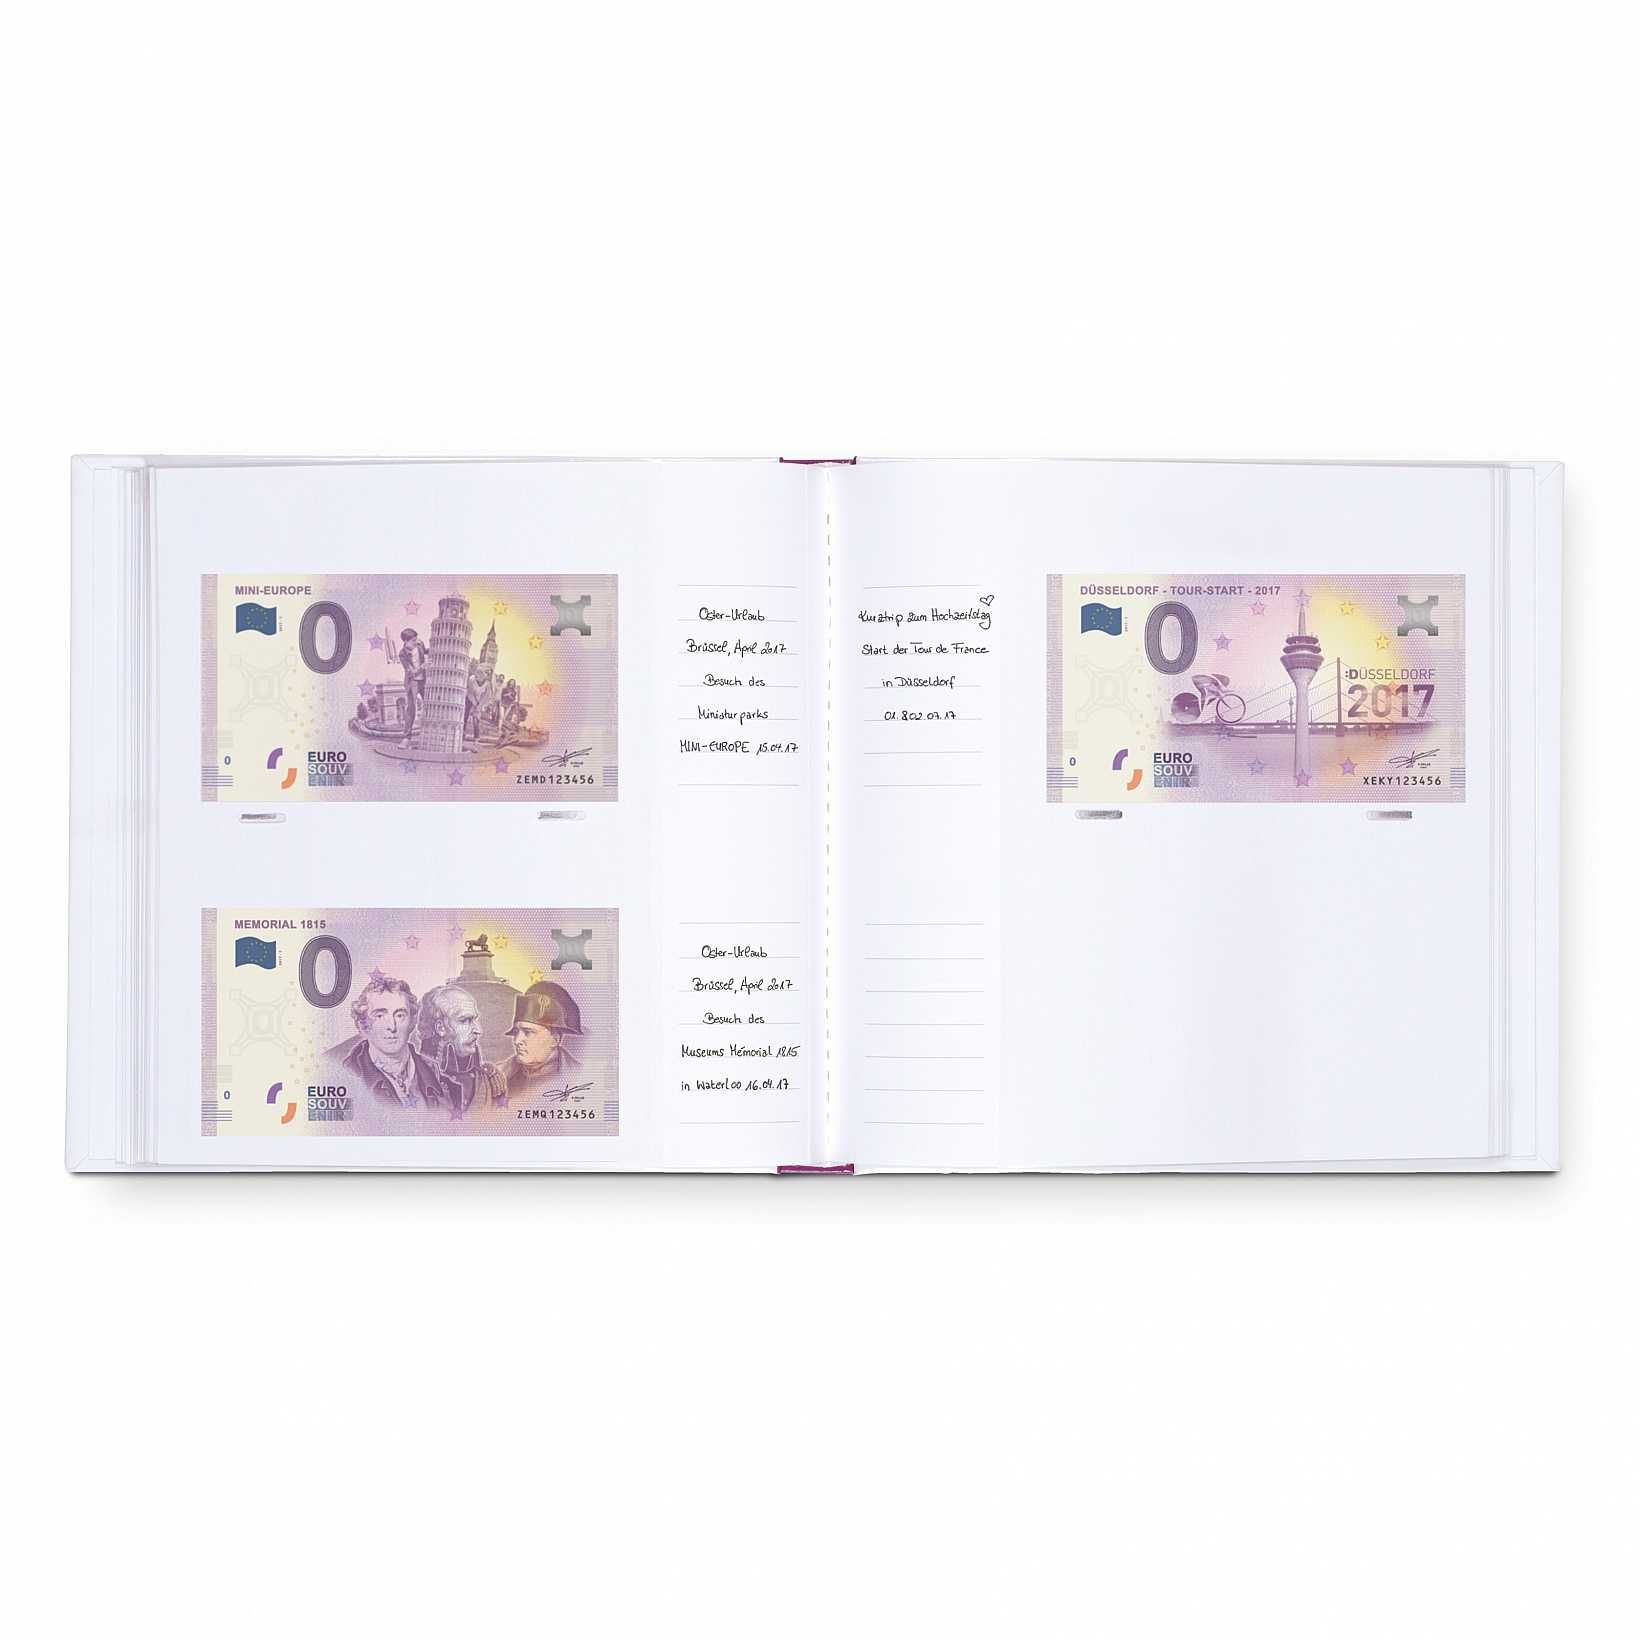 Албум за 200 броя банкноти " евро сувенирни "